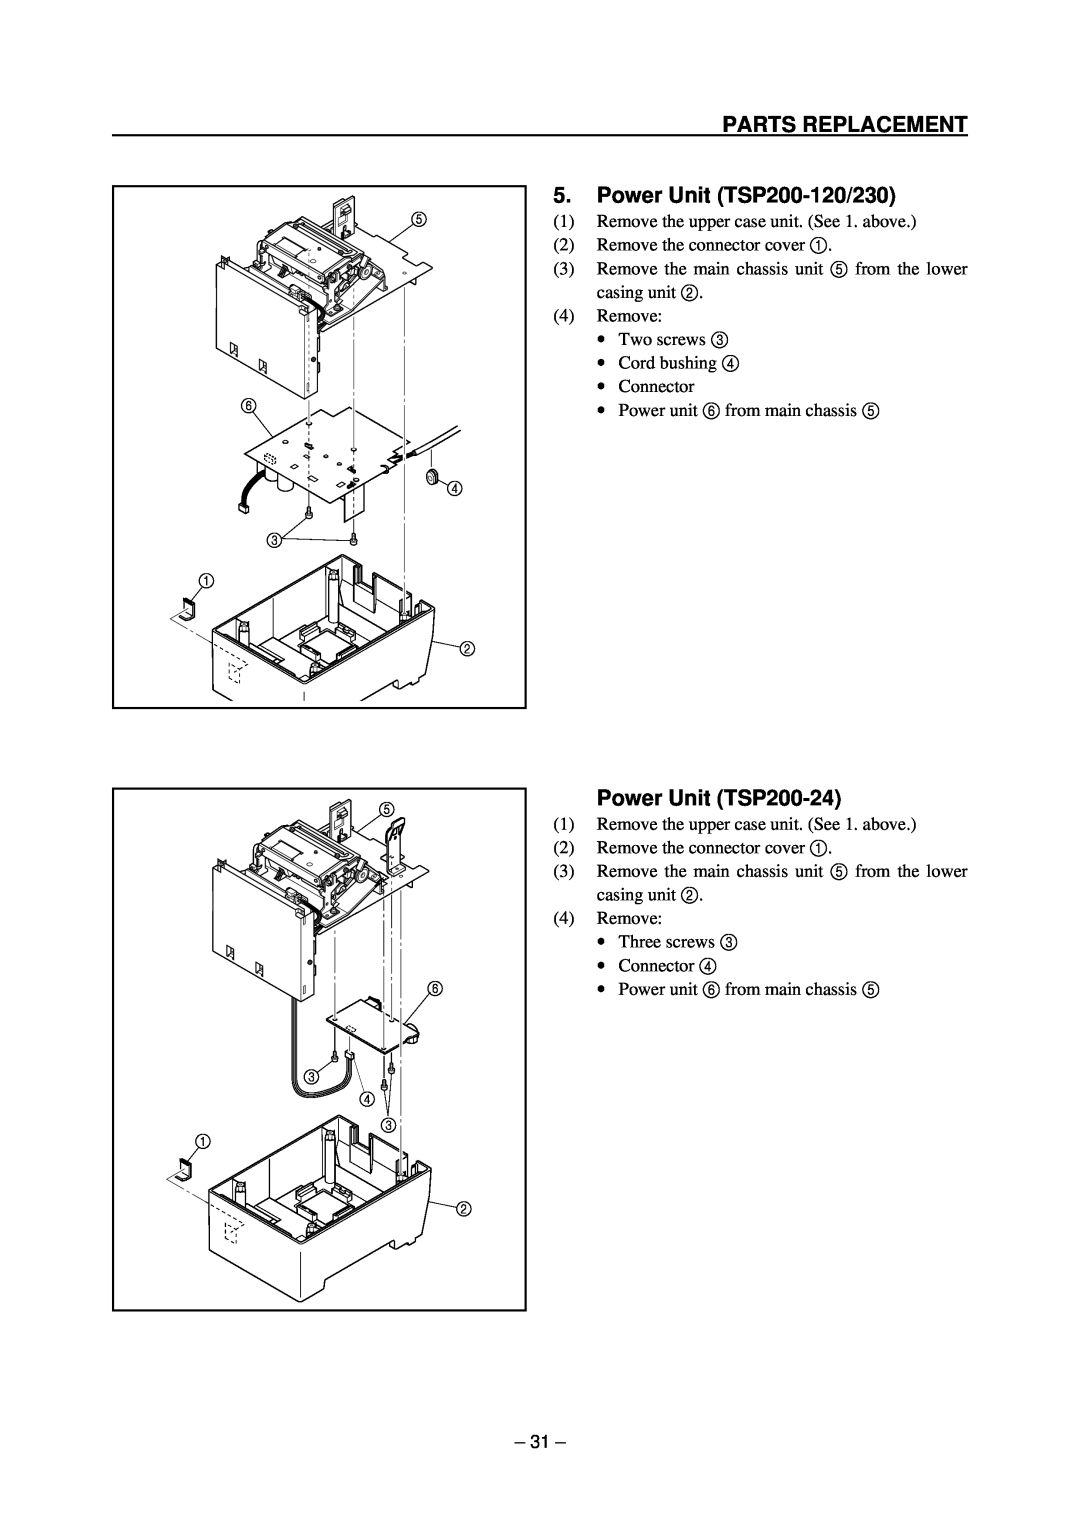 Star Micronics technical manual Power Unit TSP200-120/230, Power Unit TSP200-24, Parts Replacement 